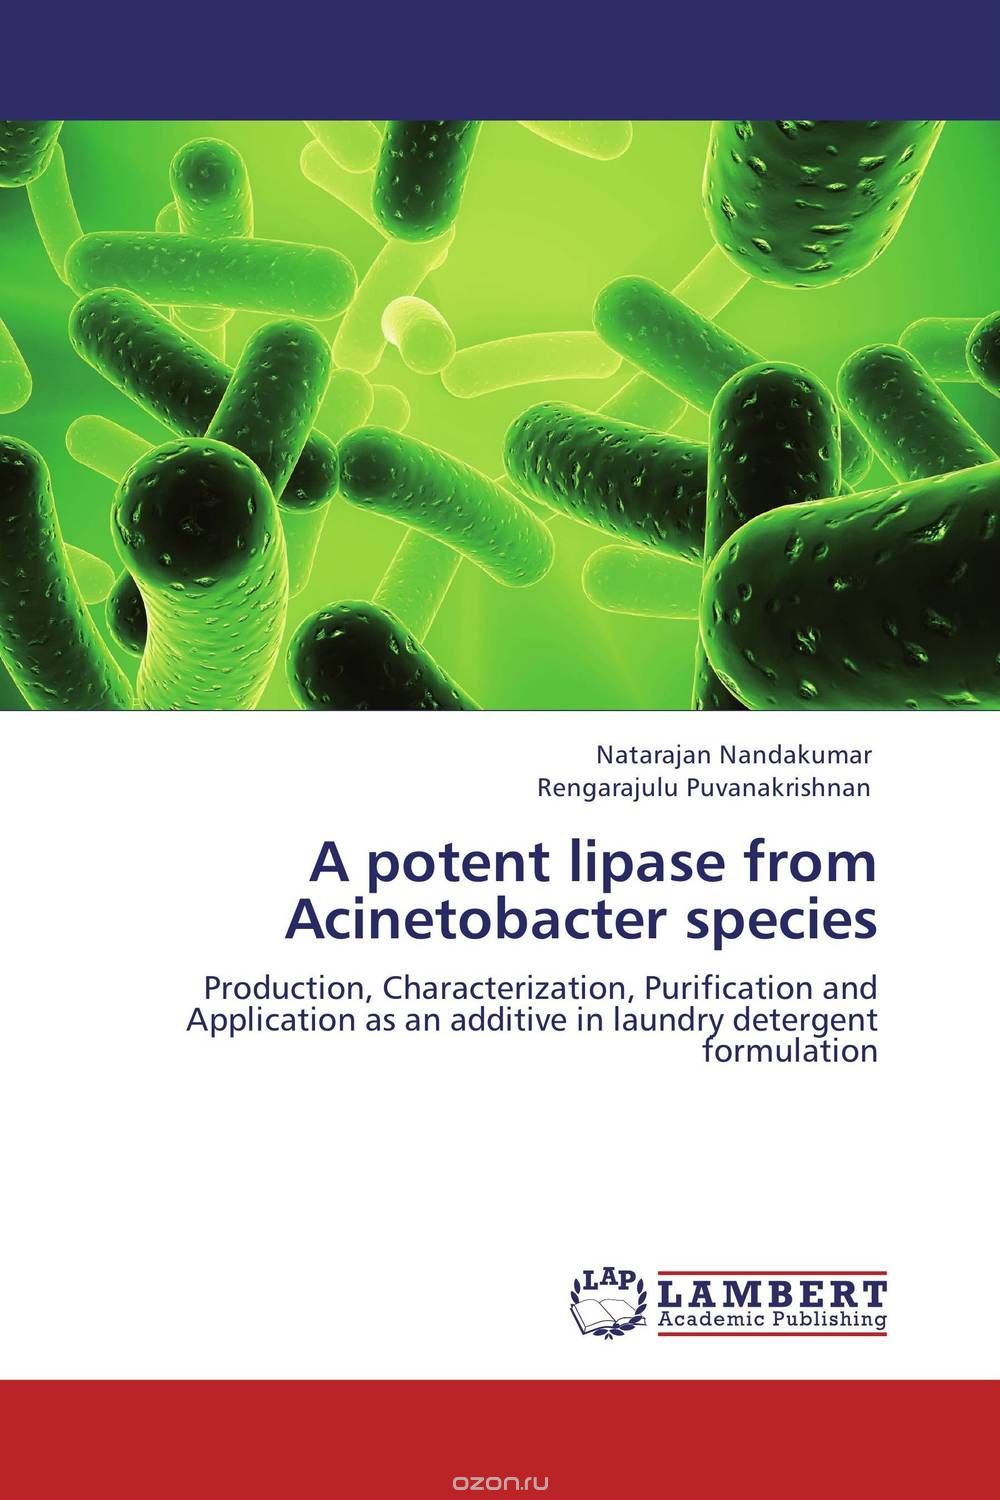 Скачать книгу "A potent lipase from Acinetobacter species"